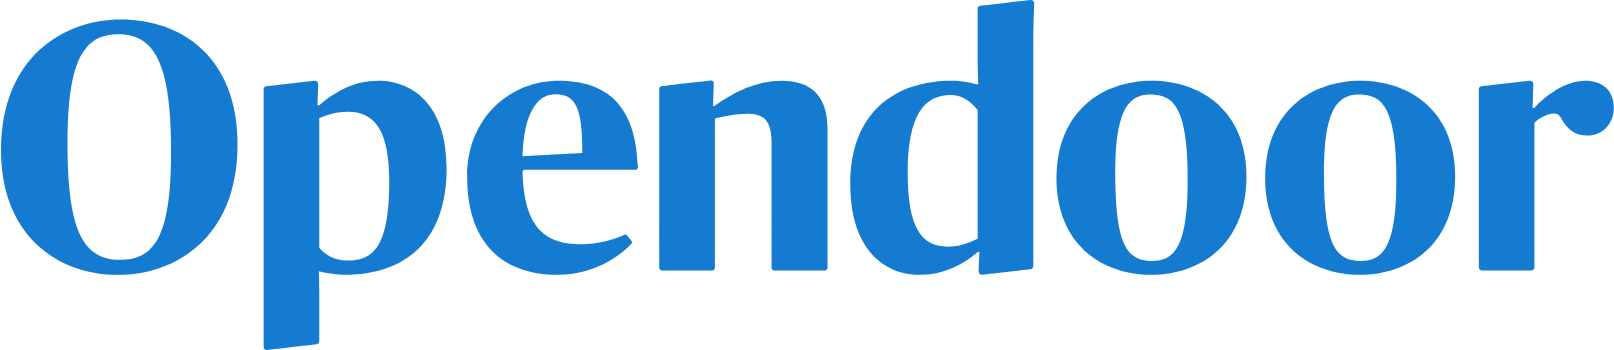 Opendoor logo large (transparent PNG)